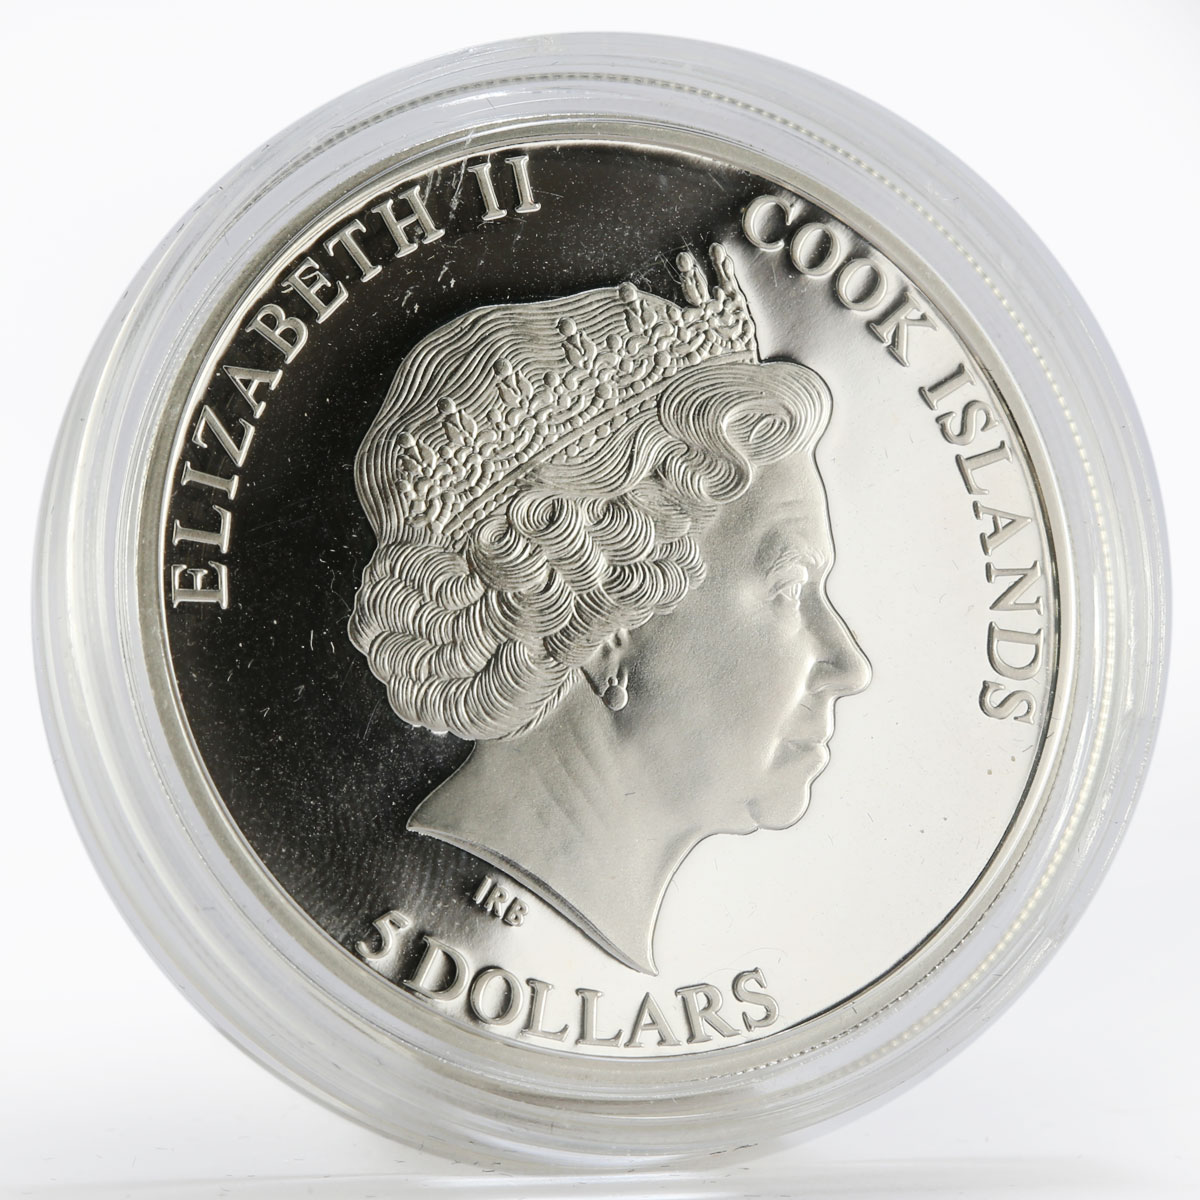 Cook Islands 5 dollars Trollius Europaeus Flower silver color coin 2012